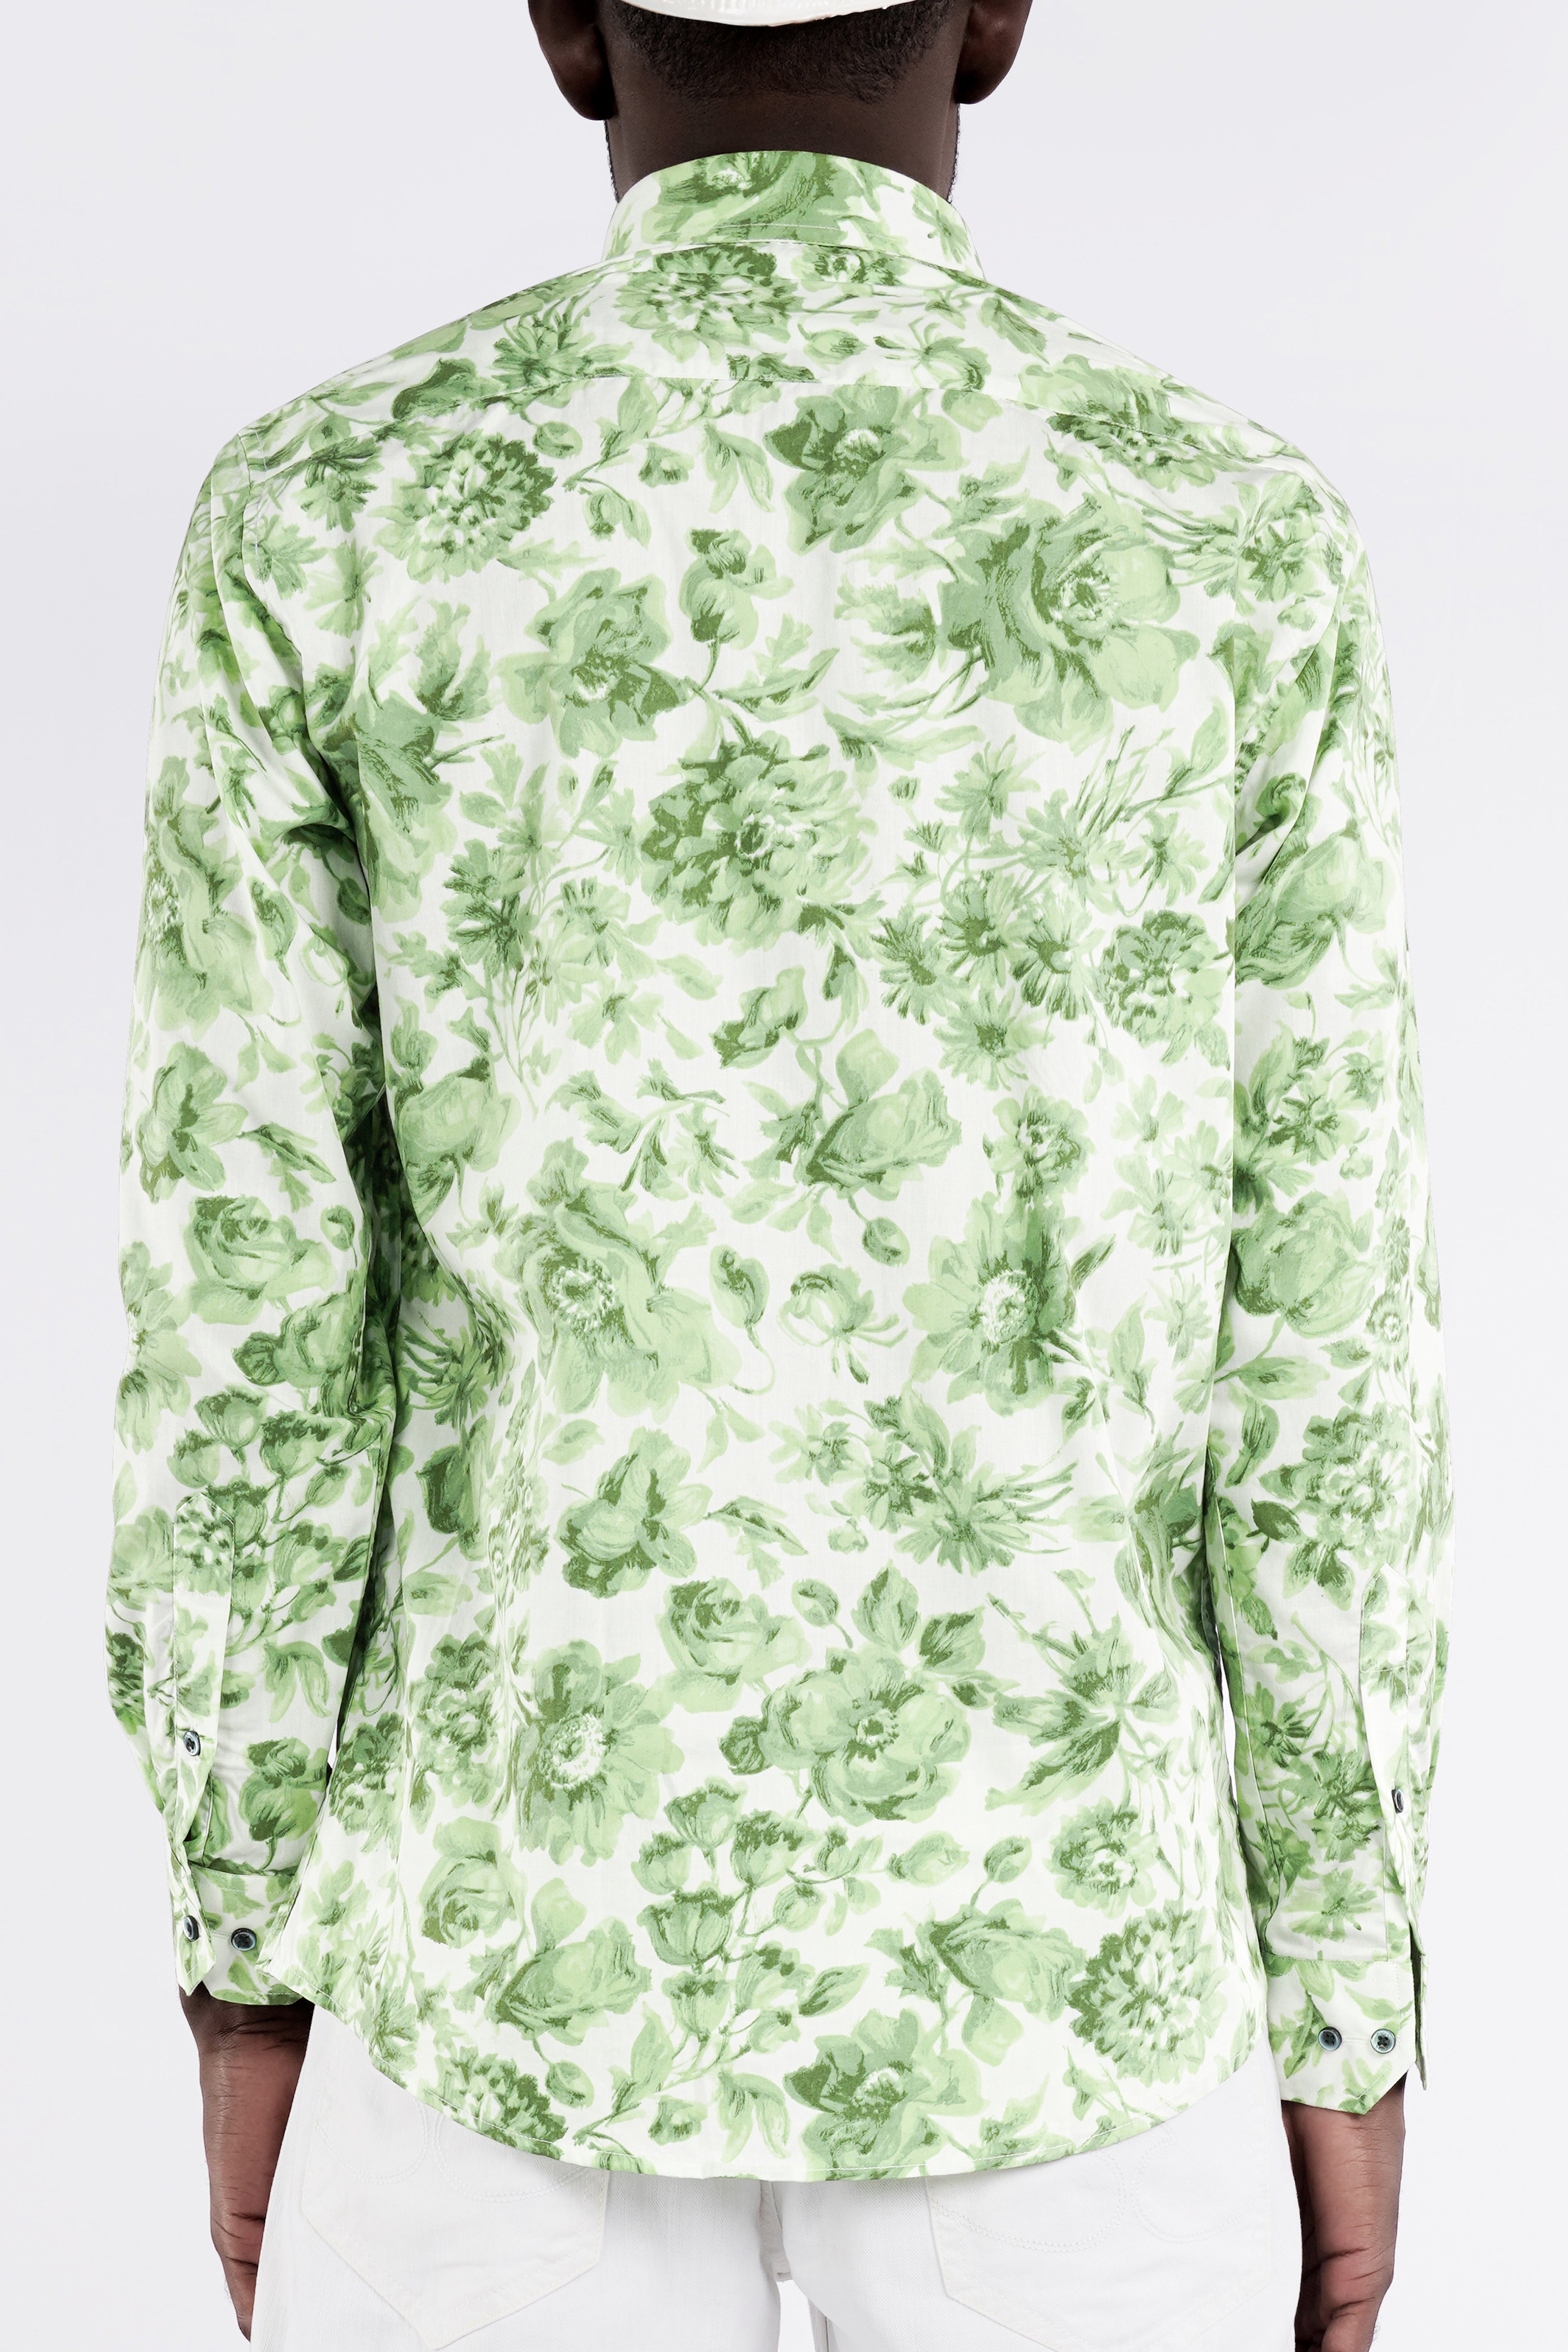 Bright White and Asparagus Green Floral Printed Premium Cotton Shirt